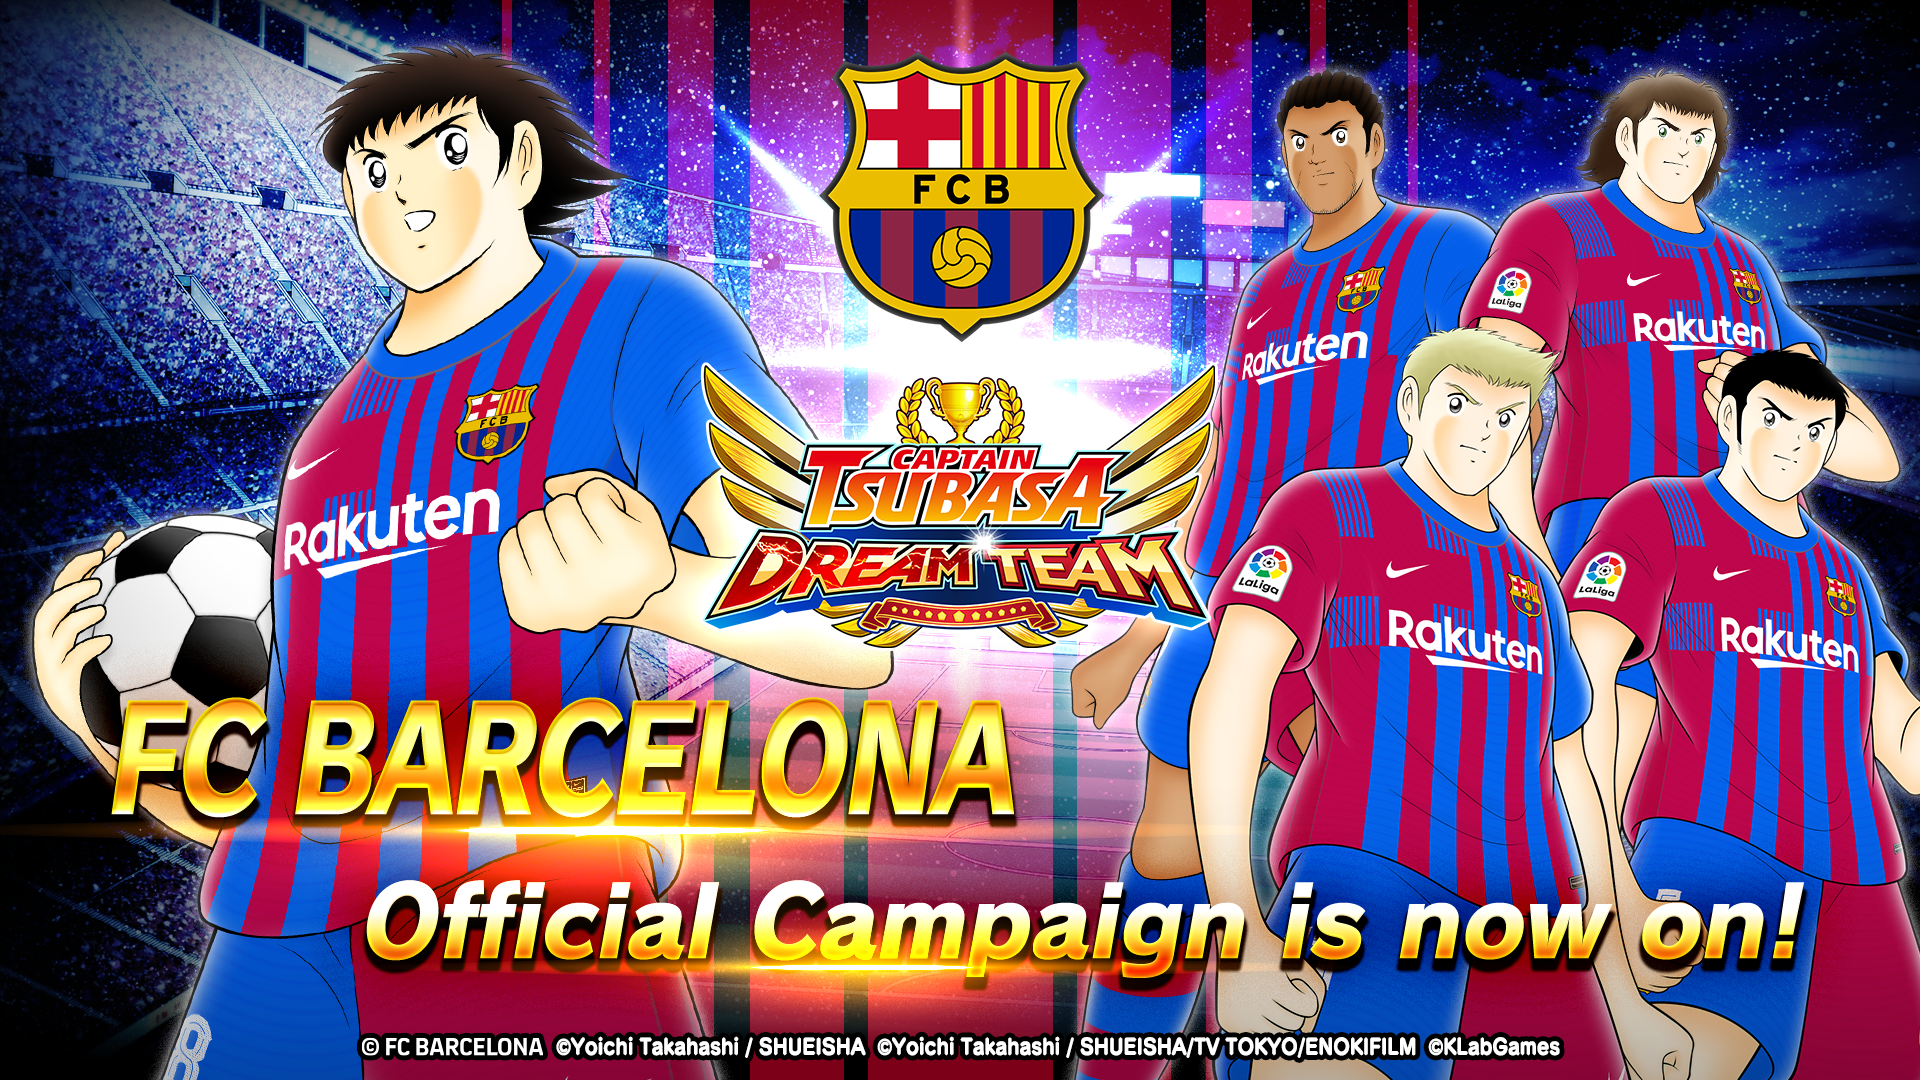 Captain Tsubasa: Dream Team Debuts New Players FC Barcelona Wearing  Official Uniforms!, News